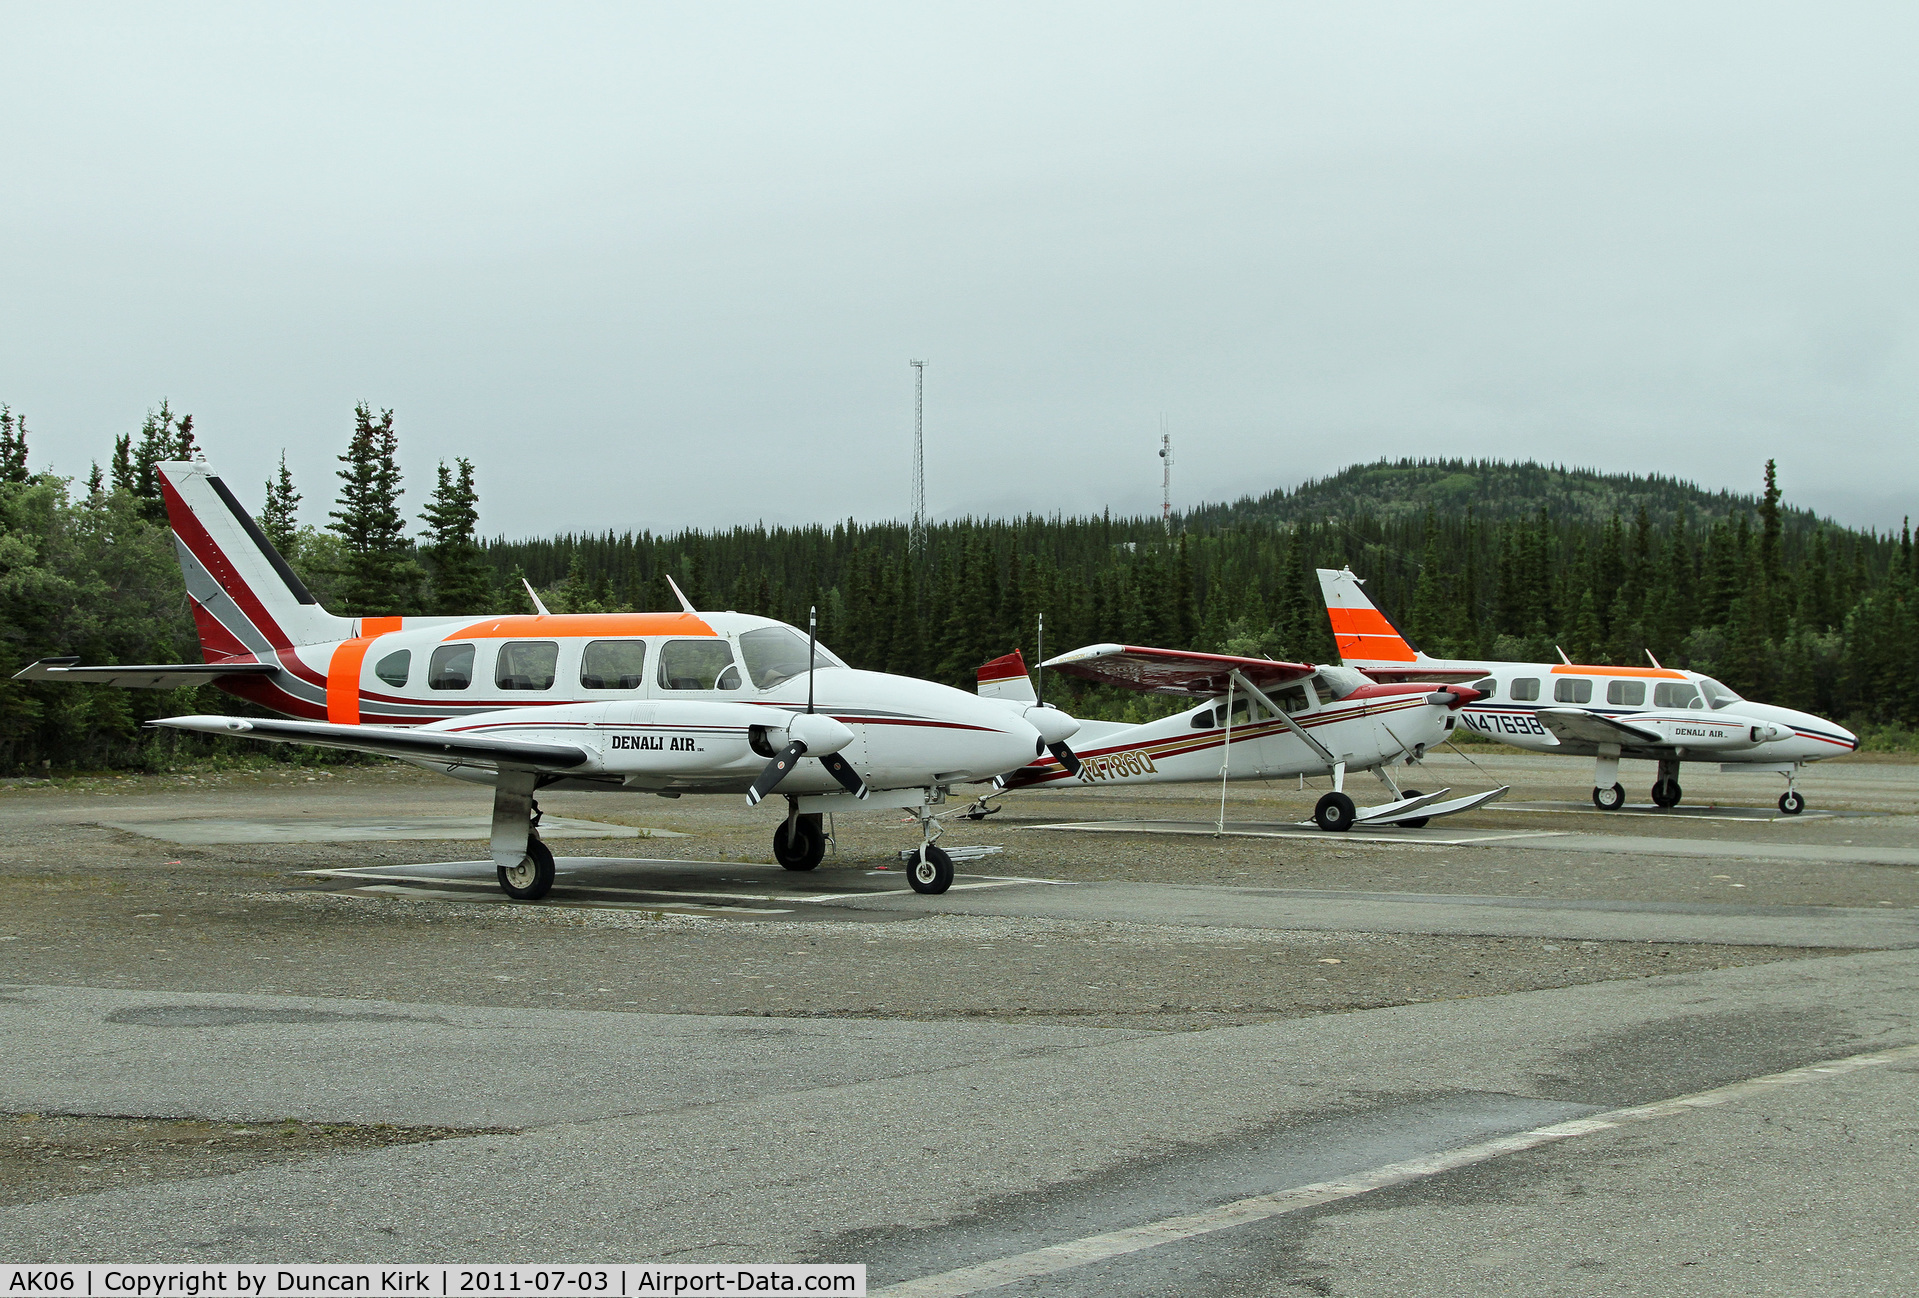 Denali Airport (AK06) - This private airport serves Denali Air and their tourist flights